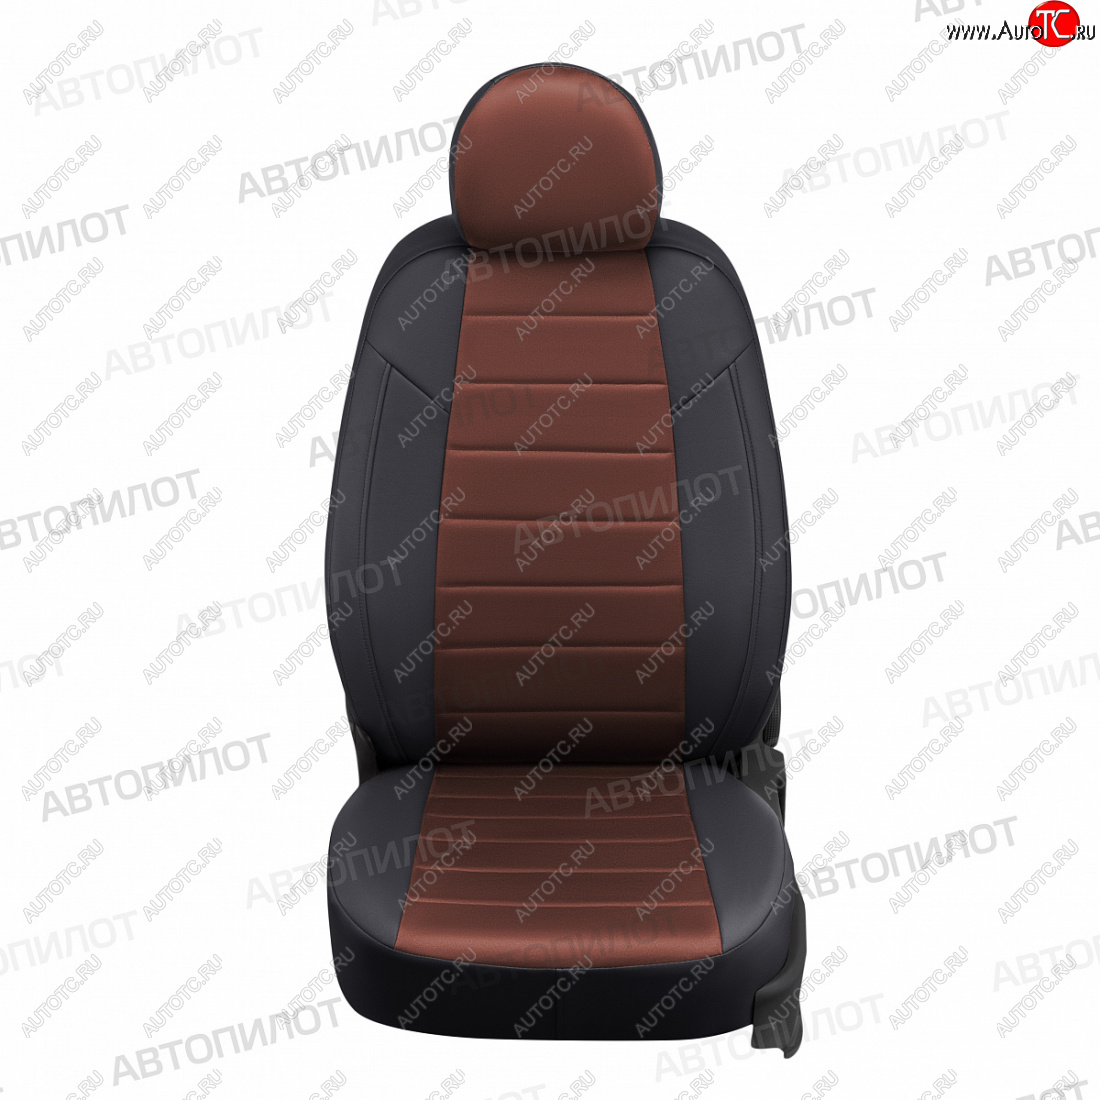 13 449 р. Чехлы сидений (экокожа/алькантара) Автопилот  Hyundai Sonata  DN8 (2019-2024) (черный/шоколад)